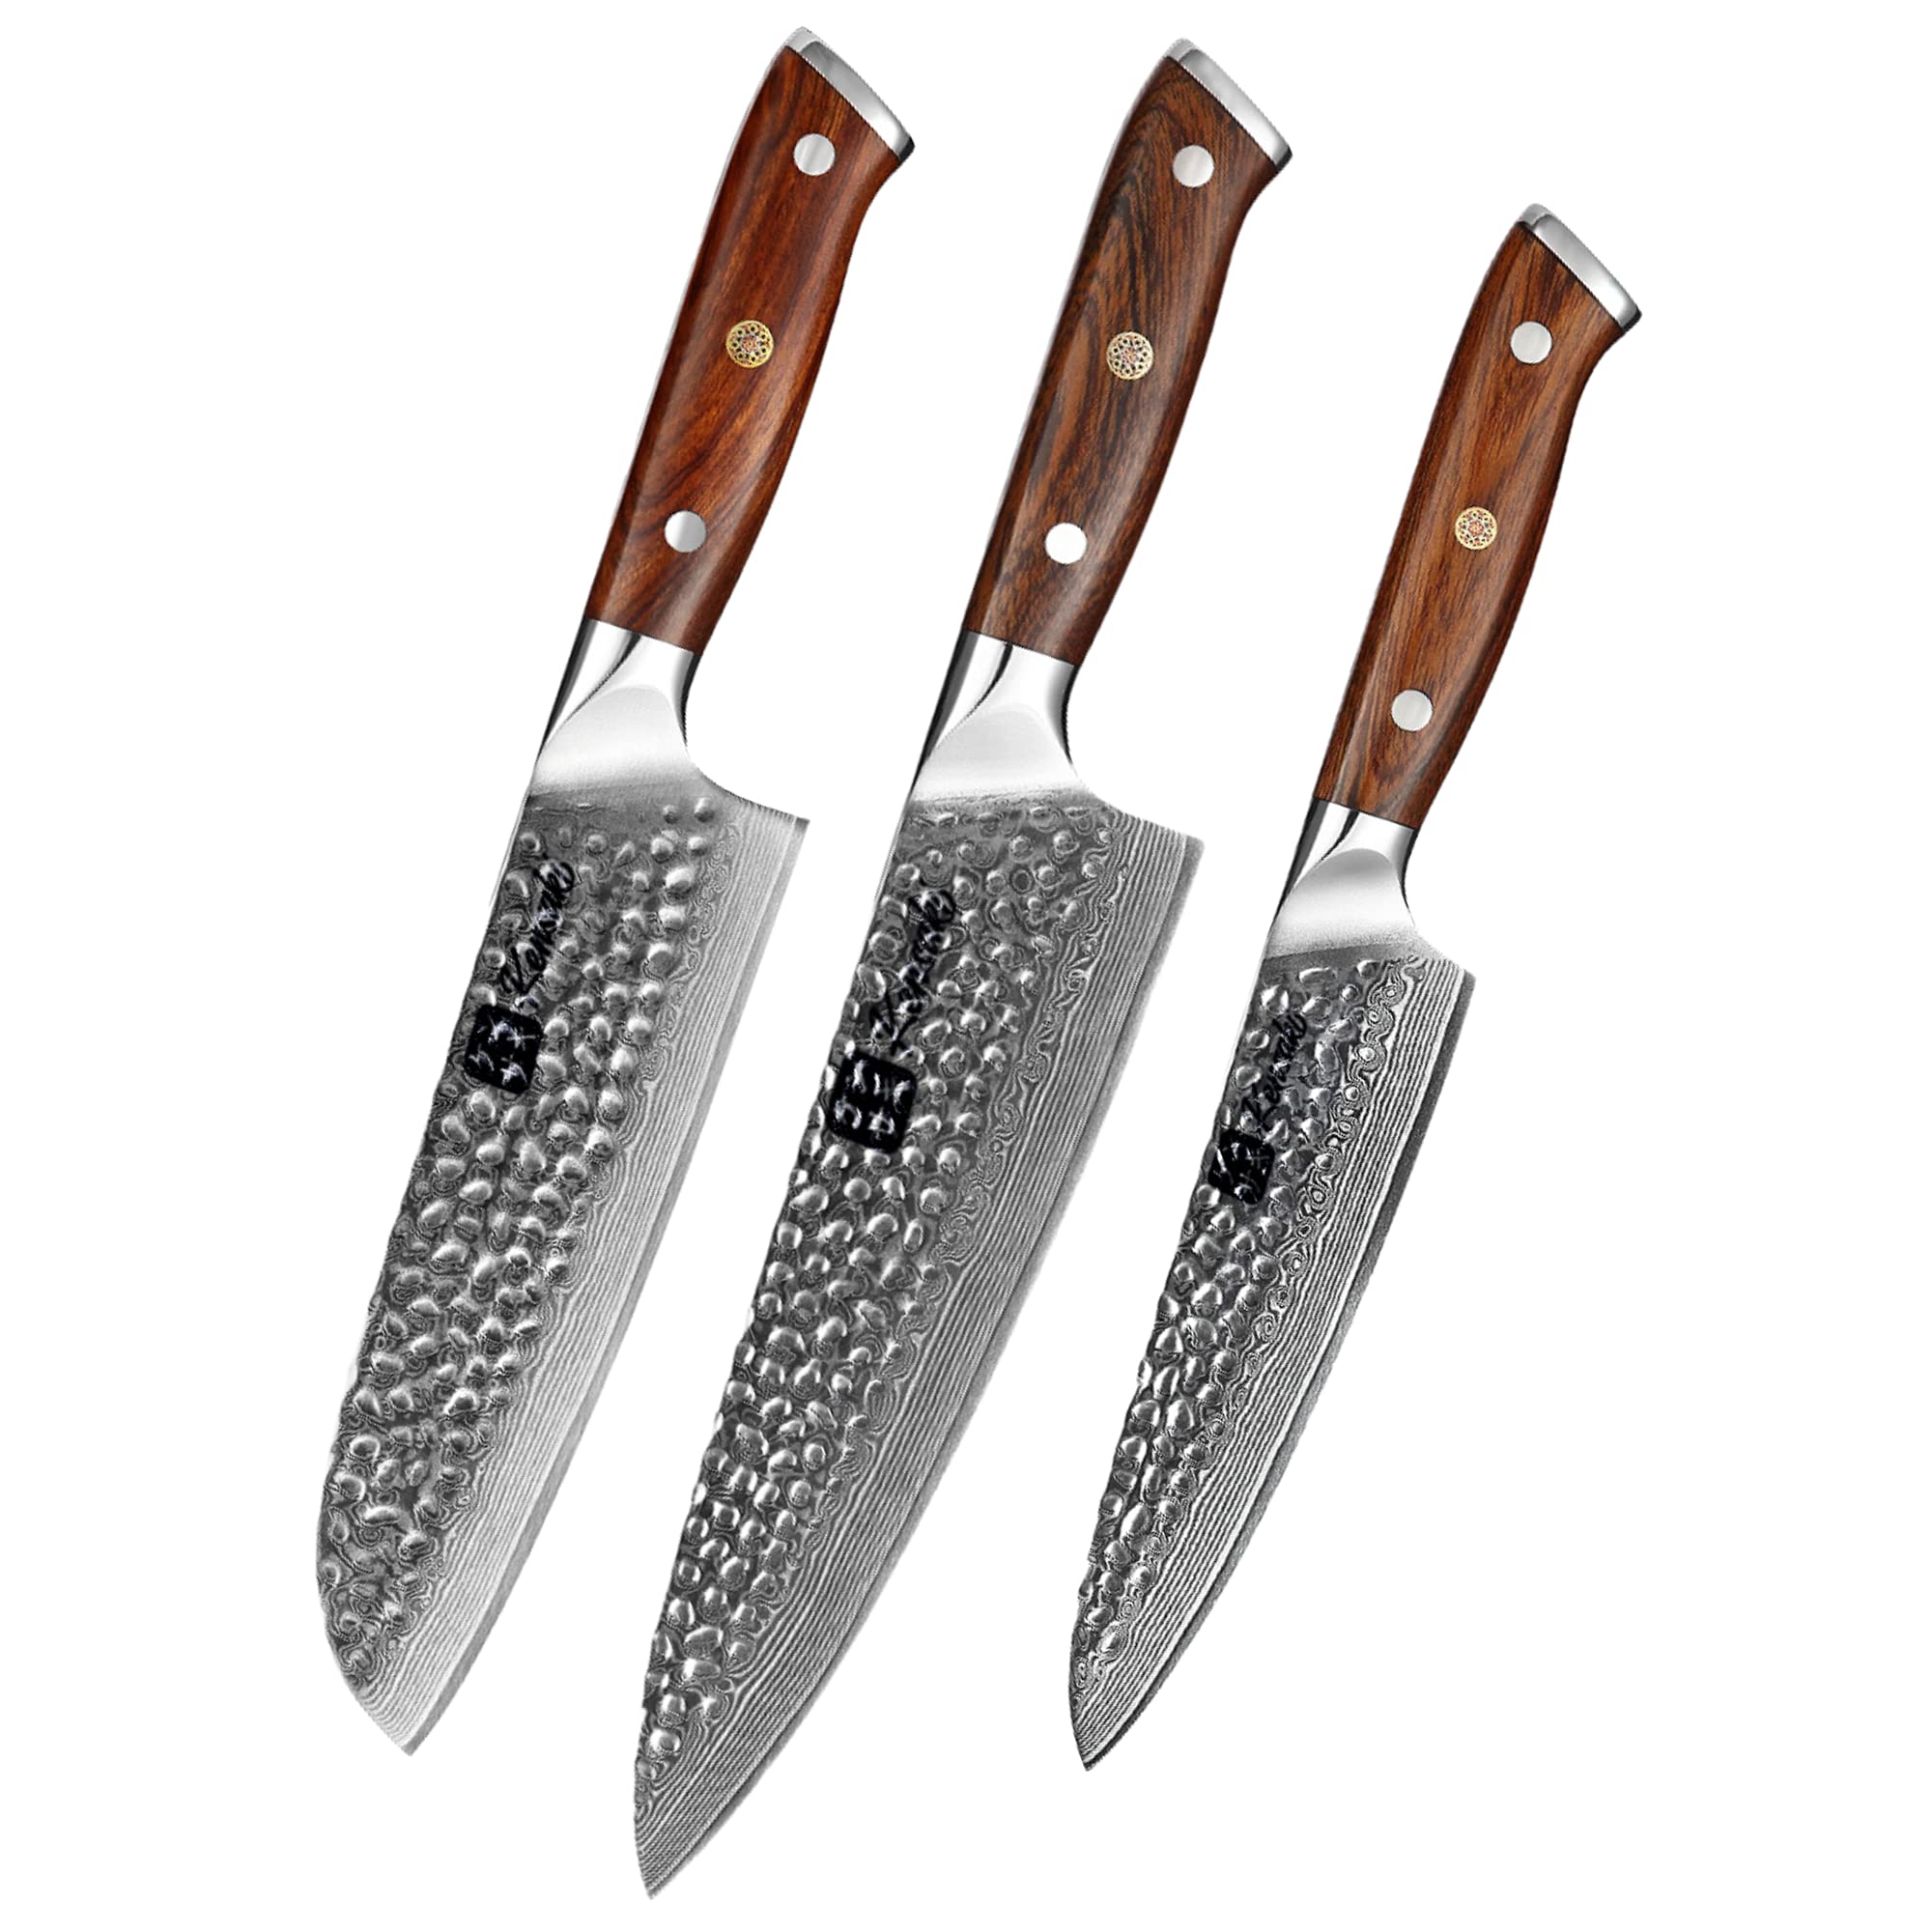 Kensaki 3er Messerset aus Damaszener Stahl Küchenmesser Japanischer Art hergestellt aus 67 Lagen Damaststahl Gehämmert Tetsu Serie KEN-153 3er Set